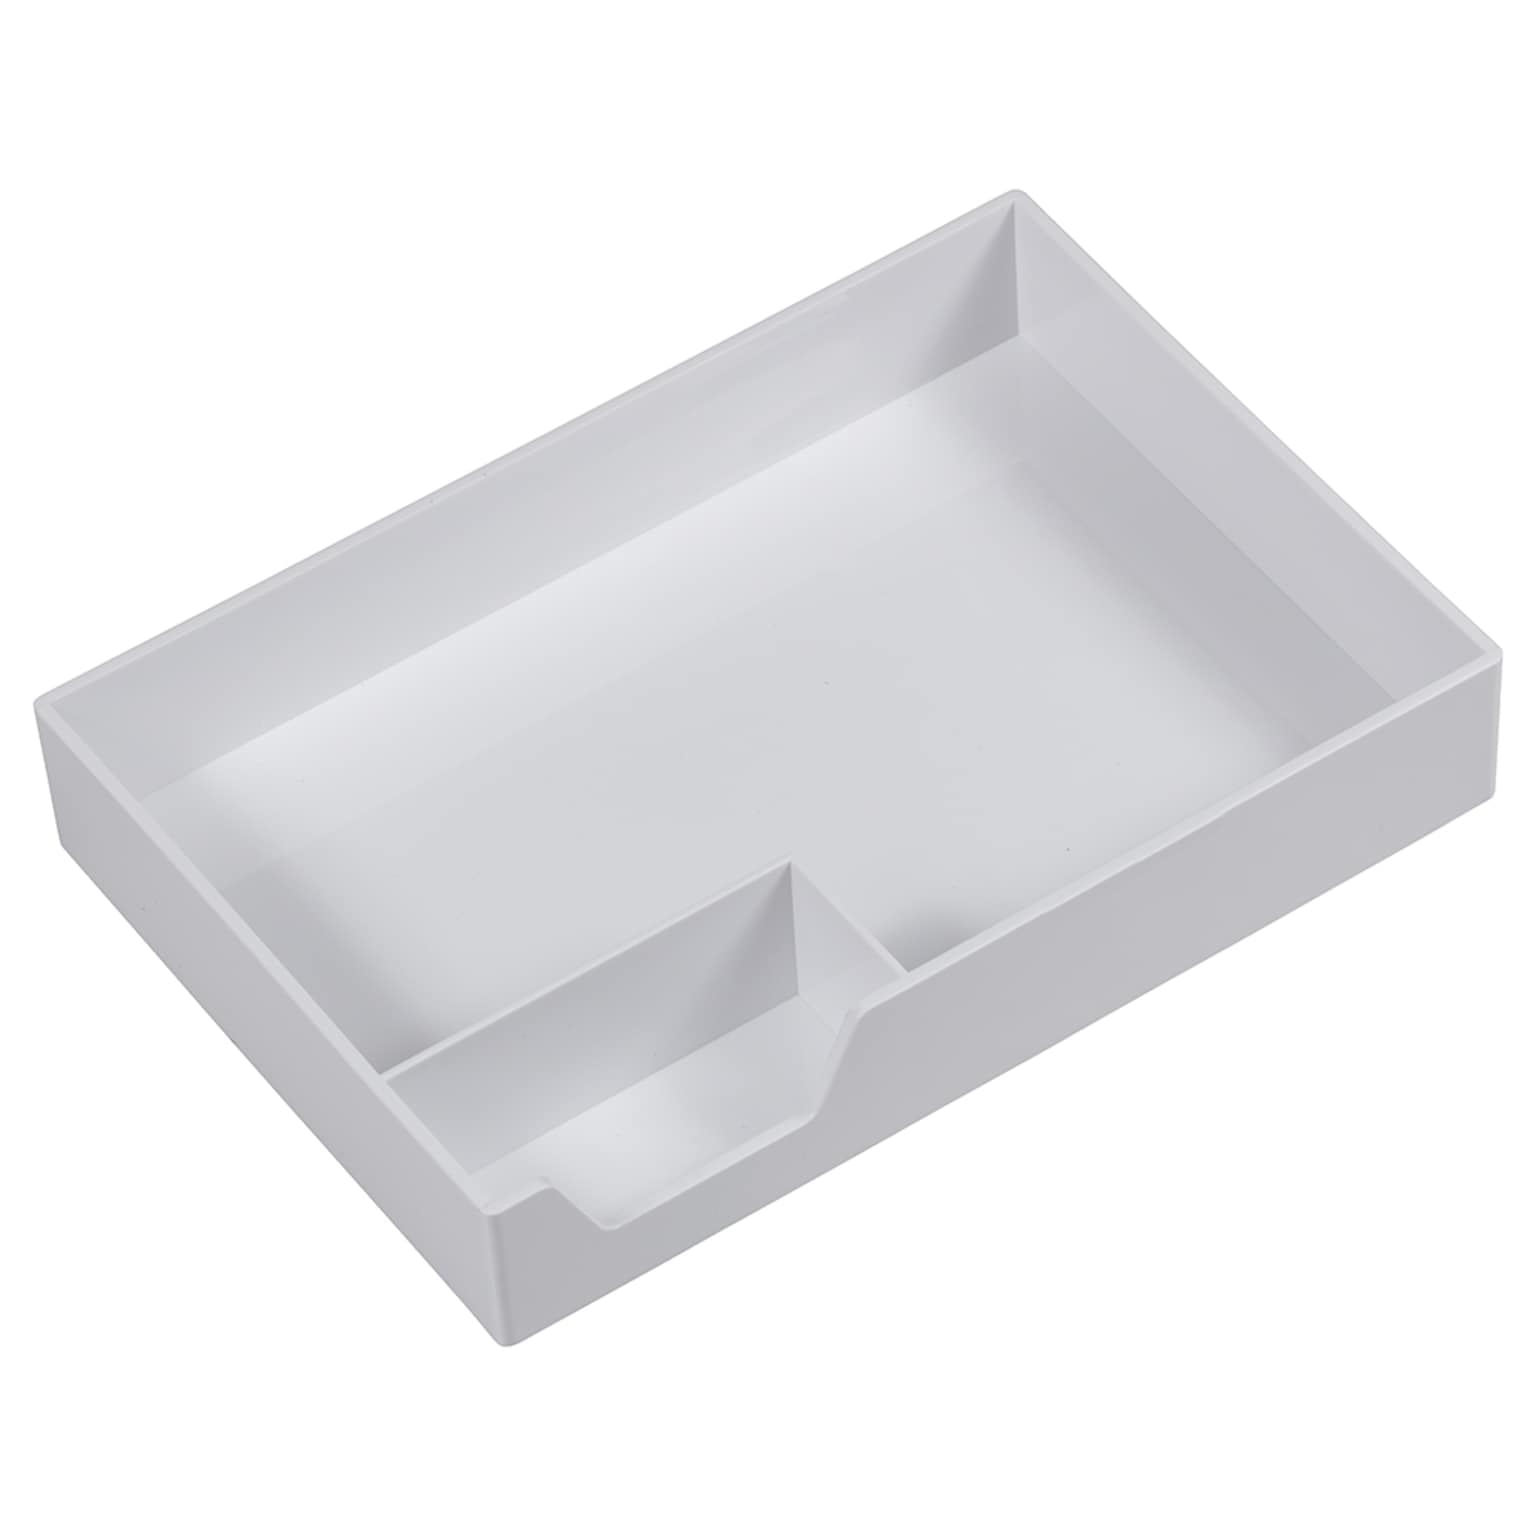 JAM Paper Half Desk Stackable Front Loading Letter Tray, White Plastic, (344TWH)